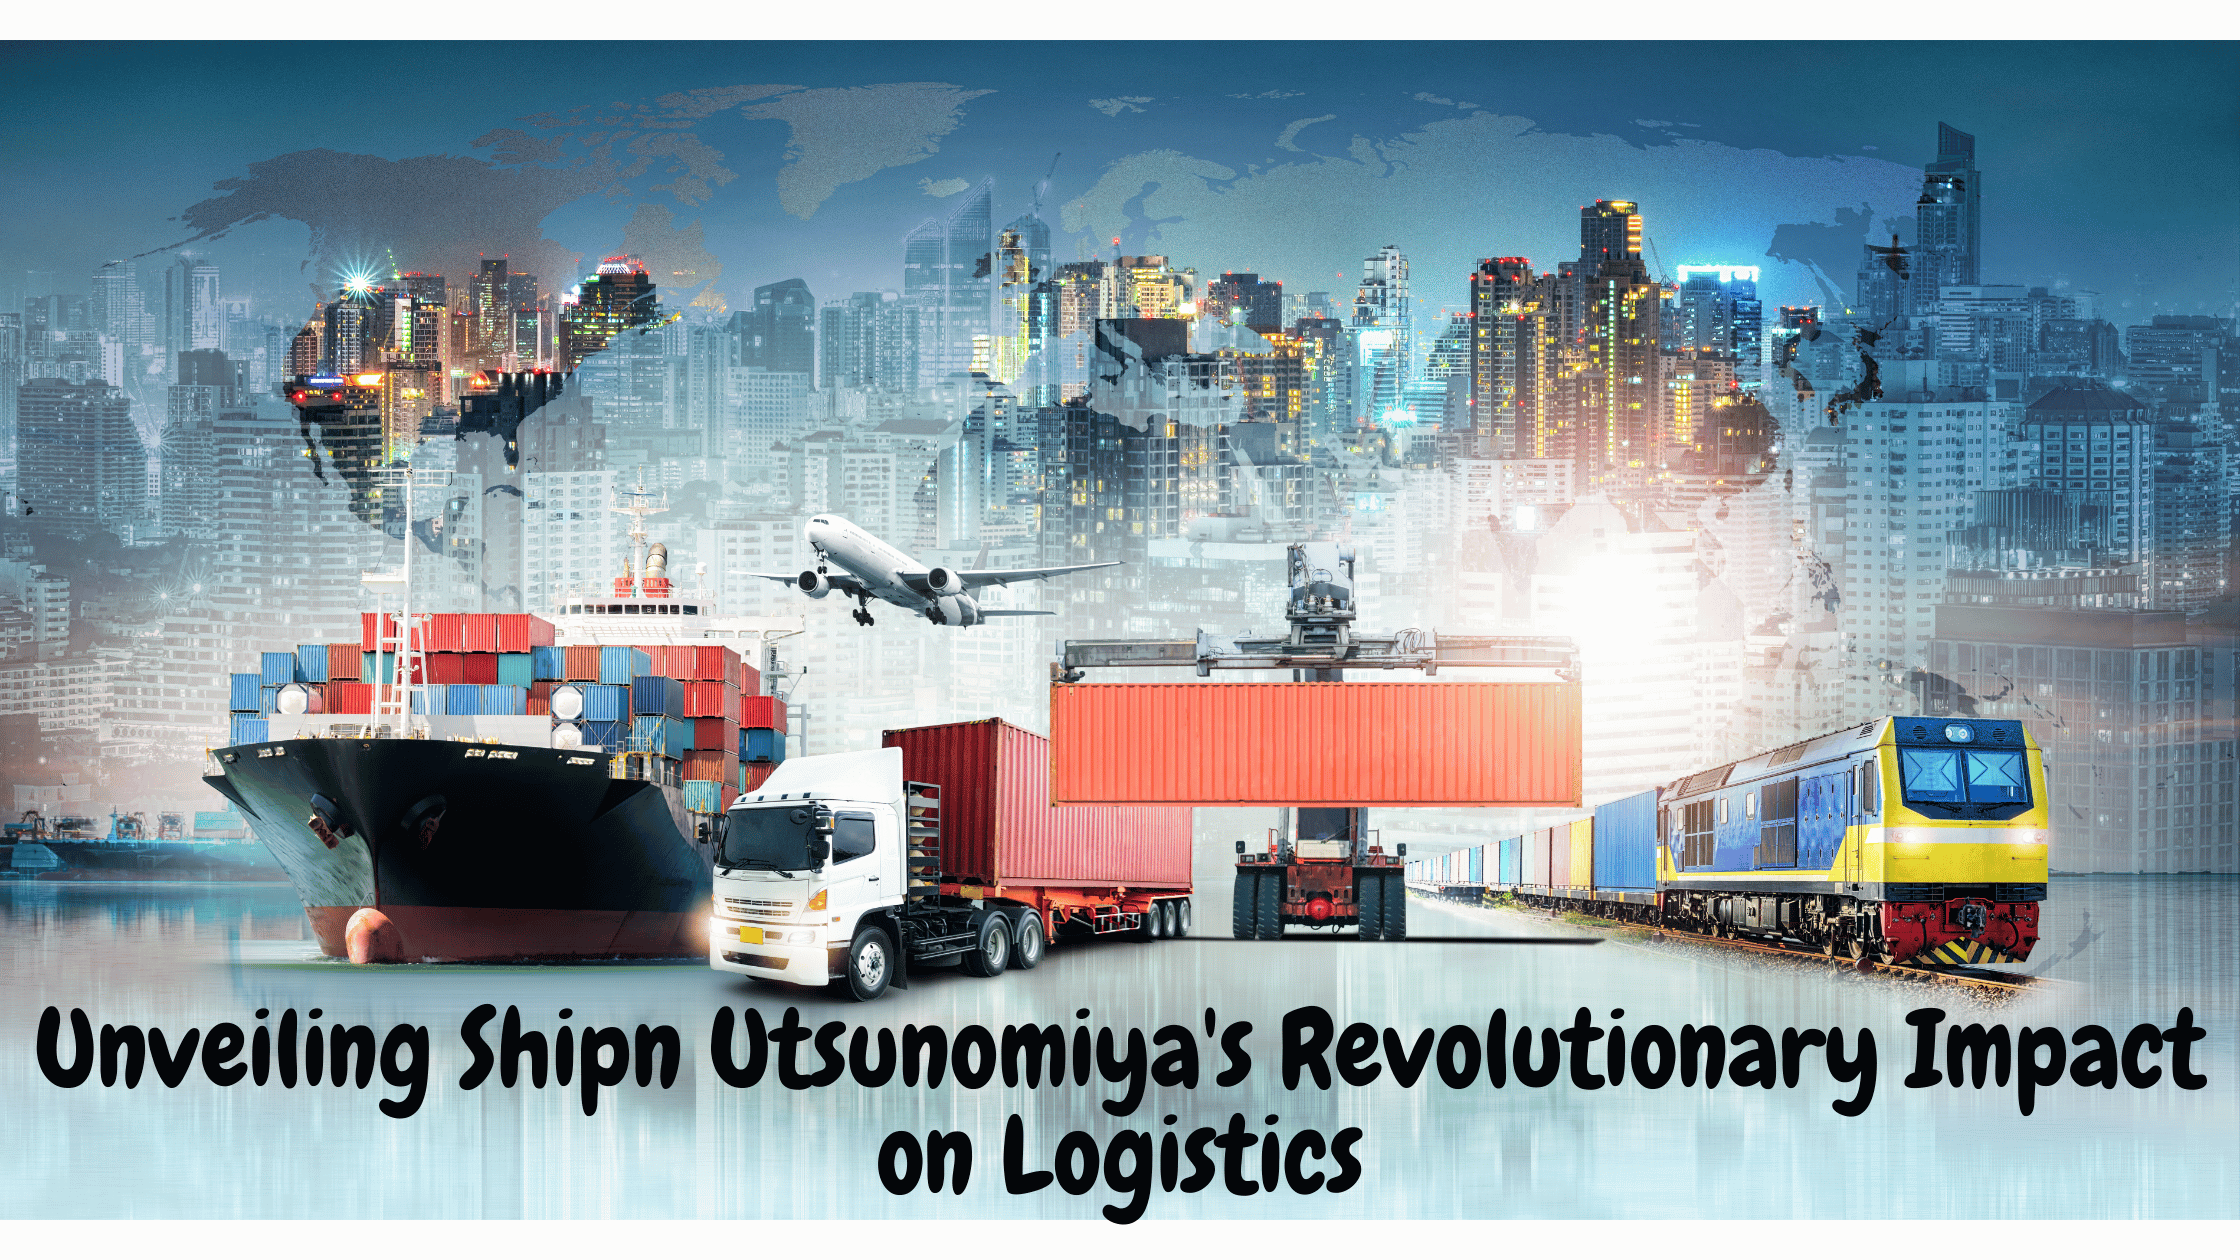 Unveiling Shipn Utsunomiya’s Revolutionary Impact on Logistics